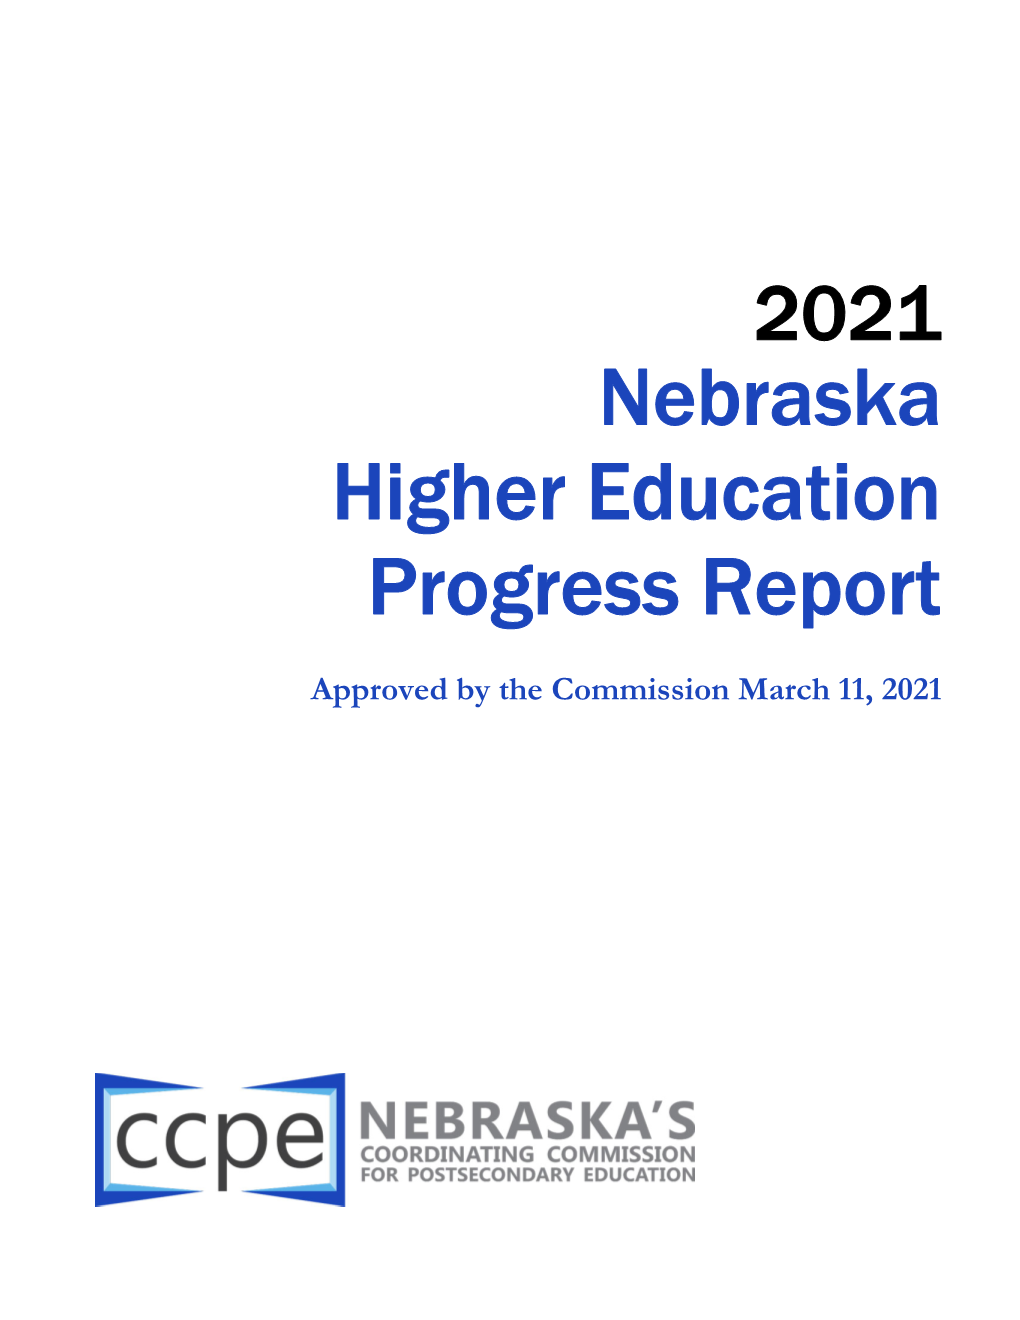 Nebraska Higher Education Progress Report | Key Takeaways and Recommendations I